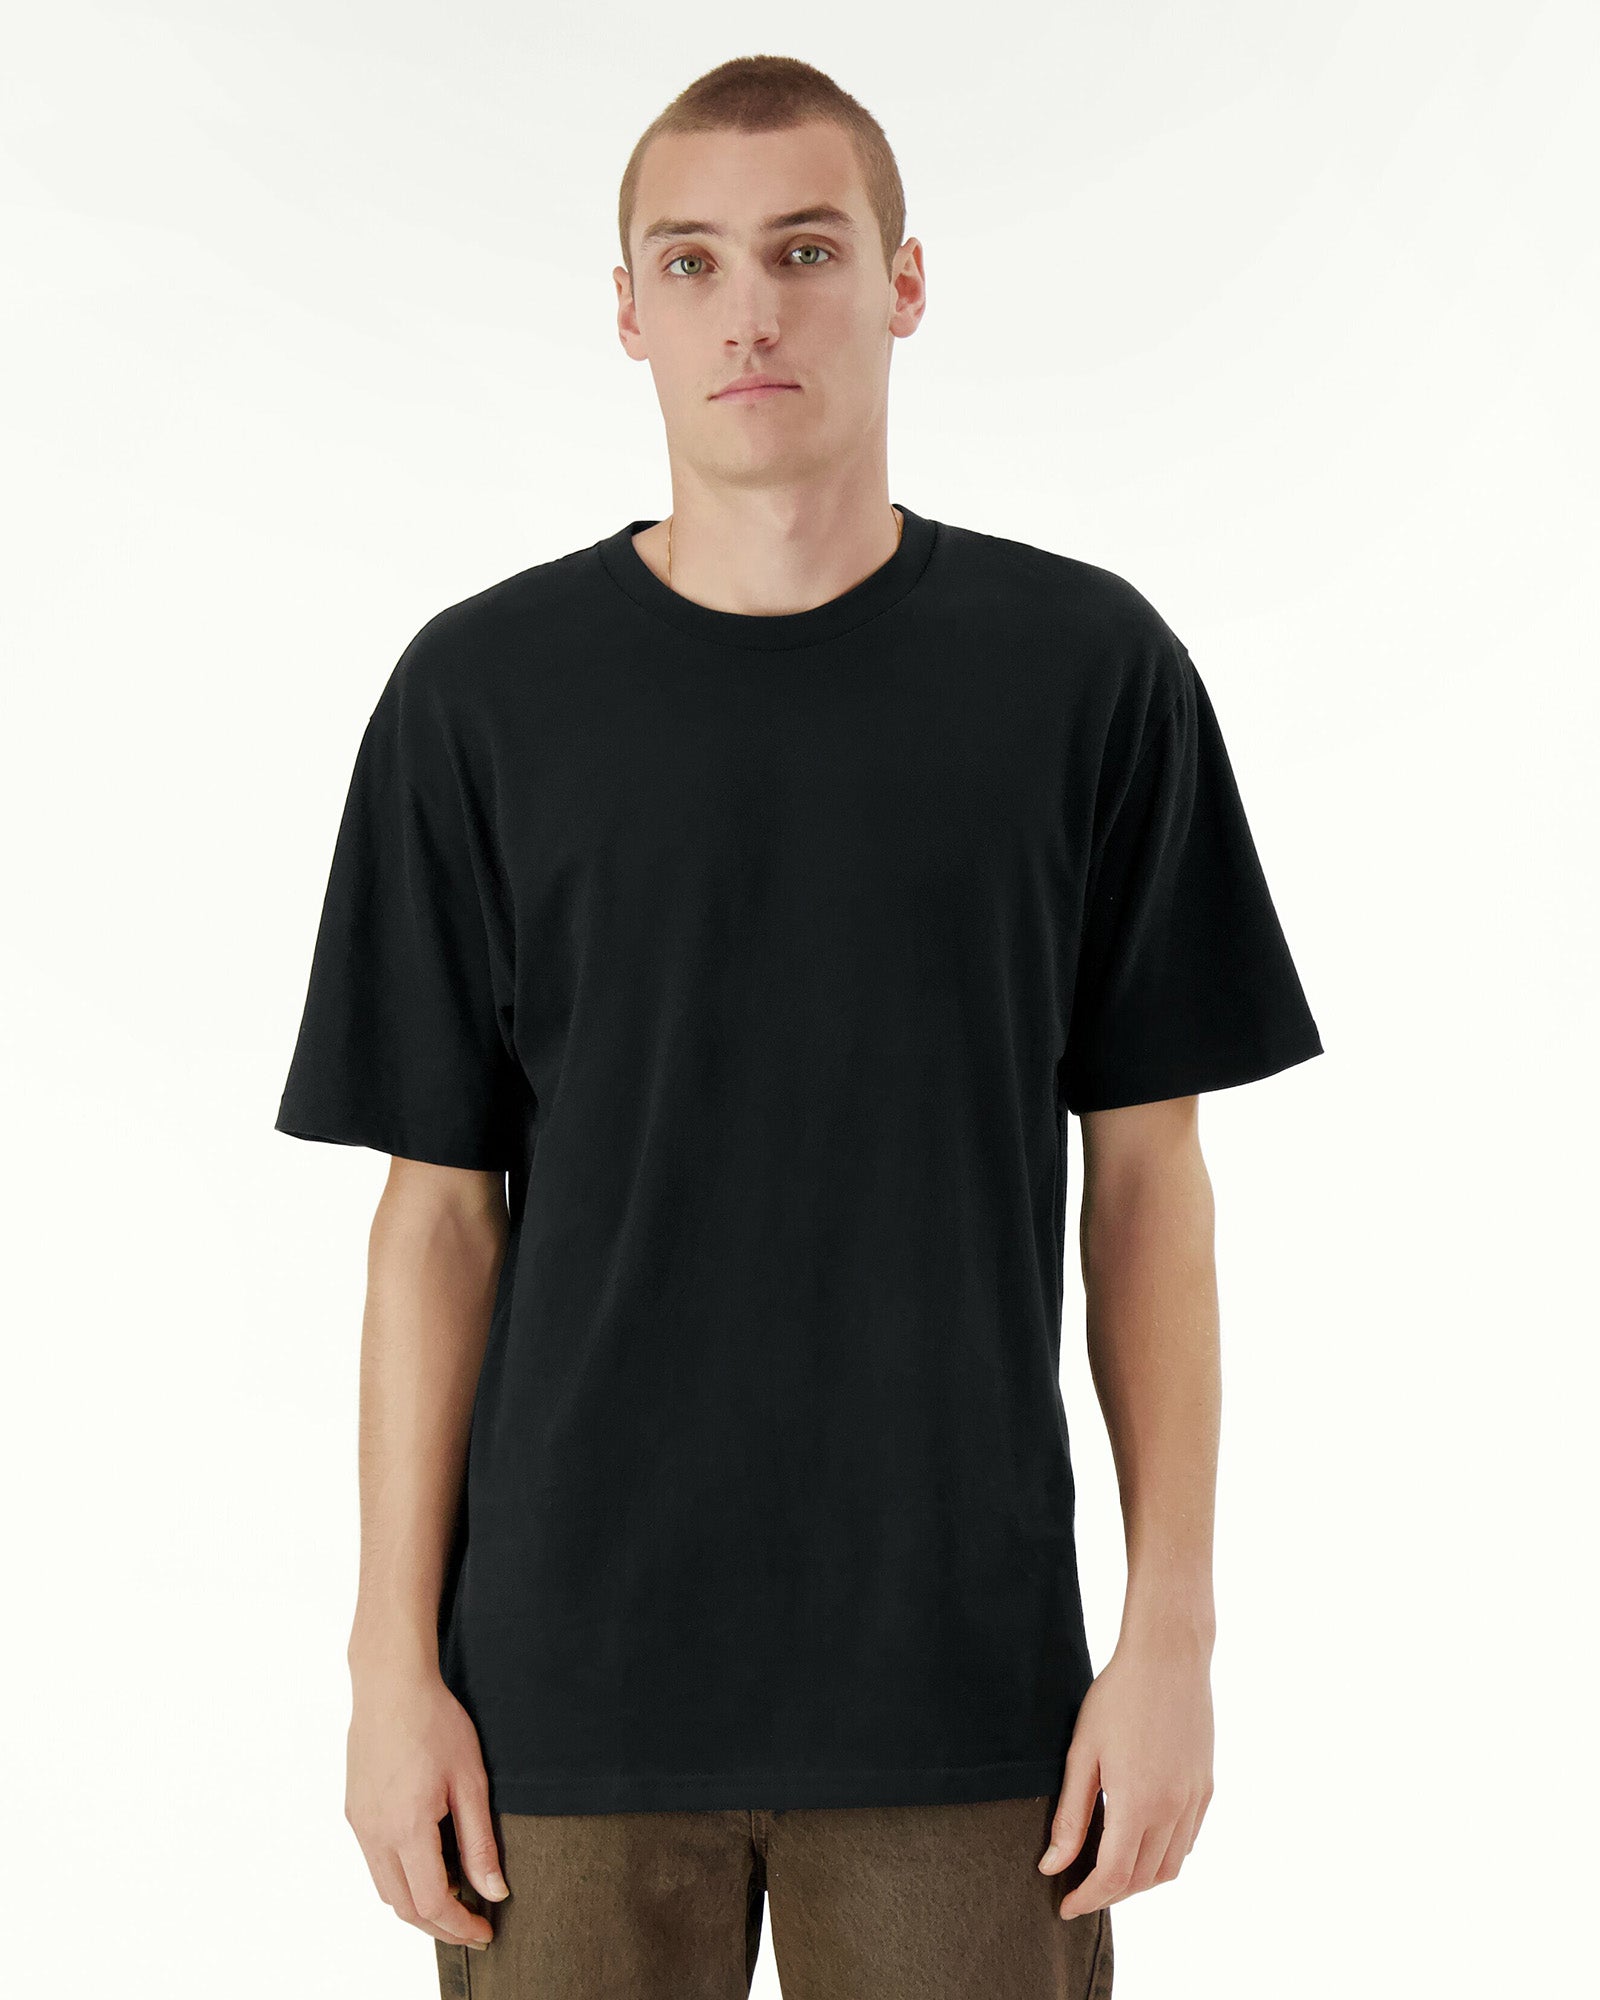 Sueded Unisex Short Sleeve T-shirt - Black